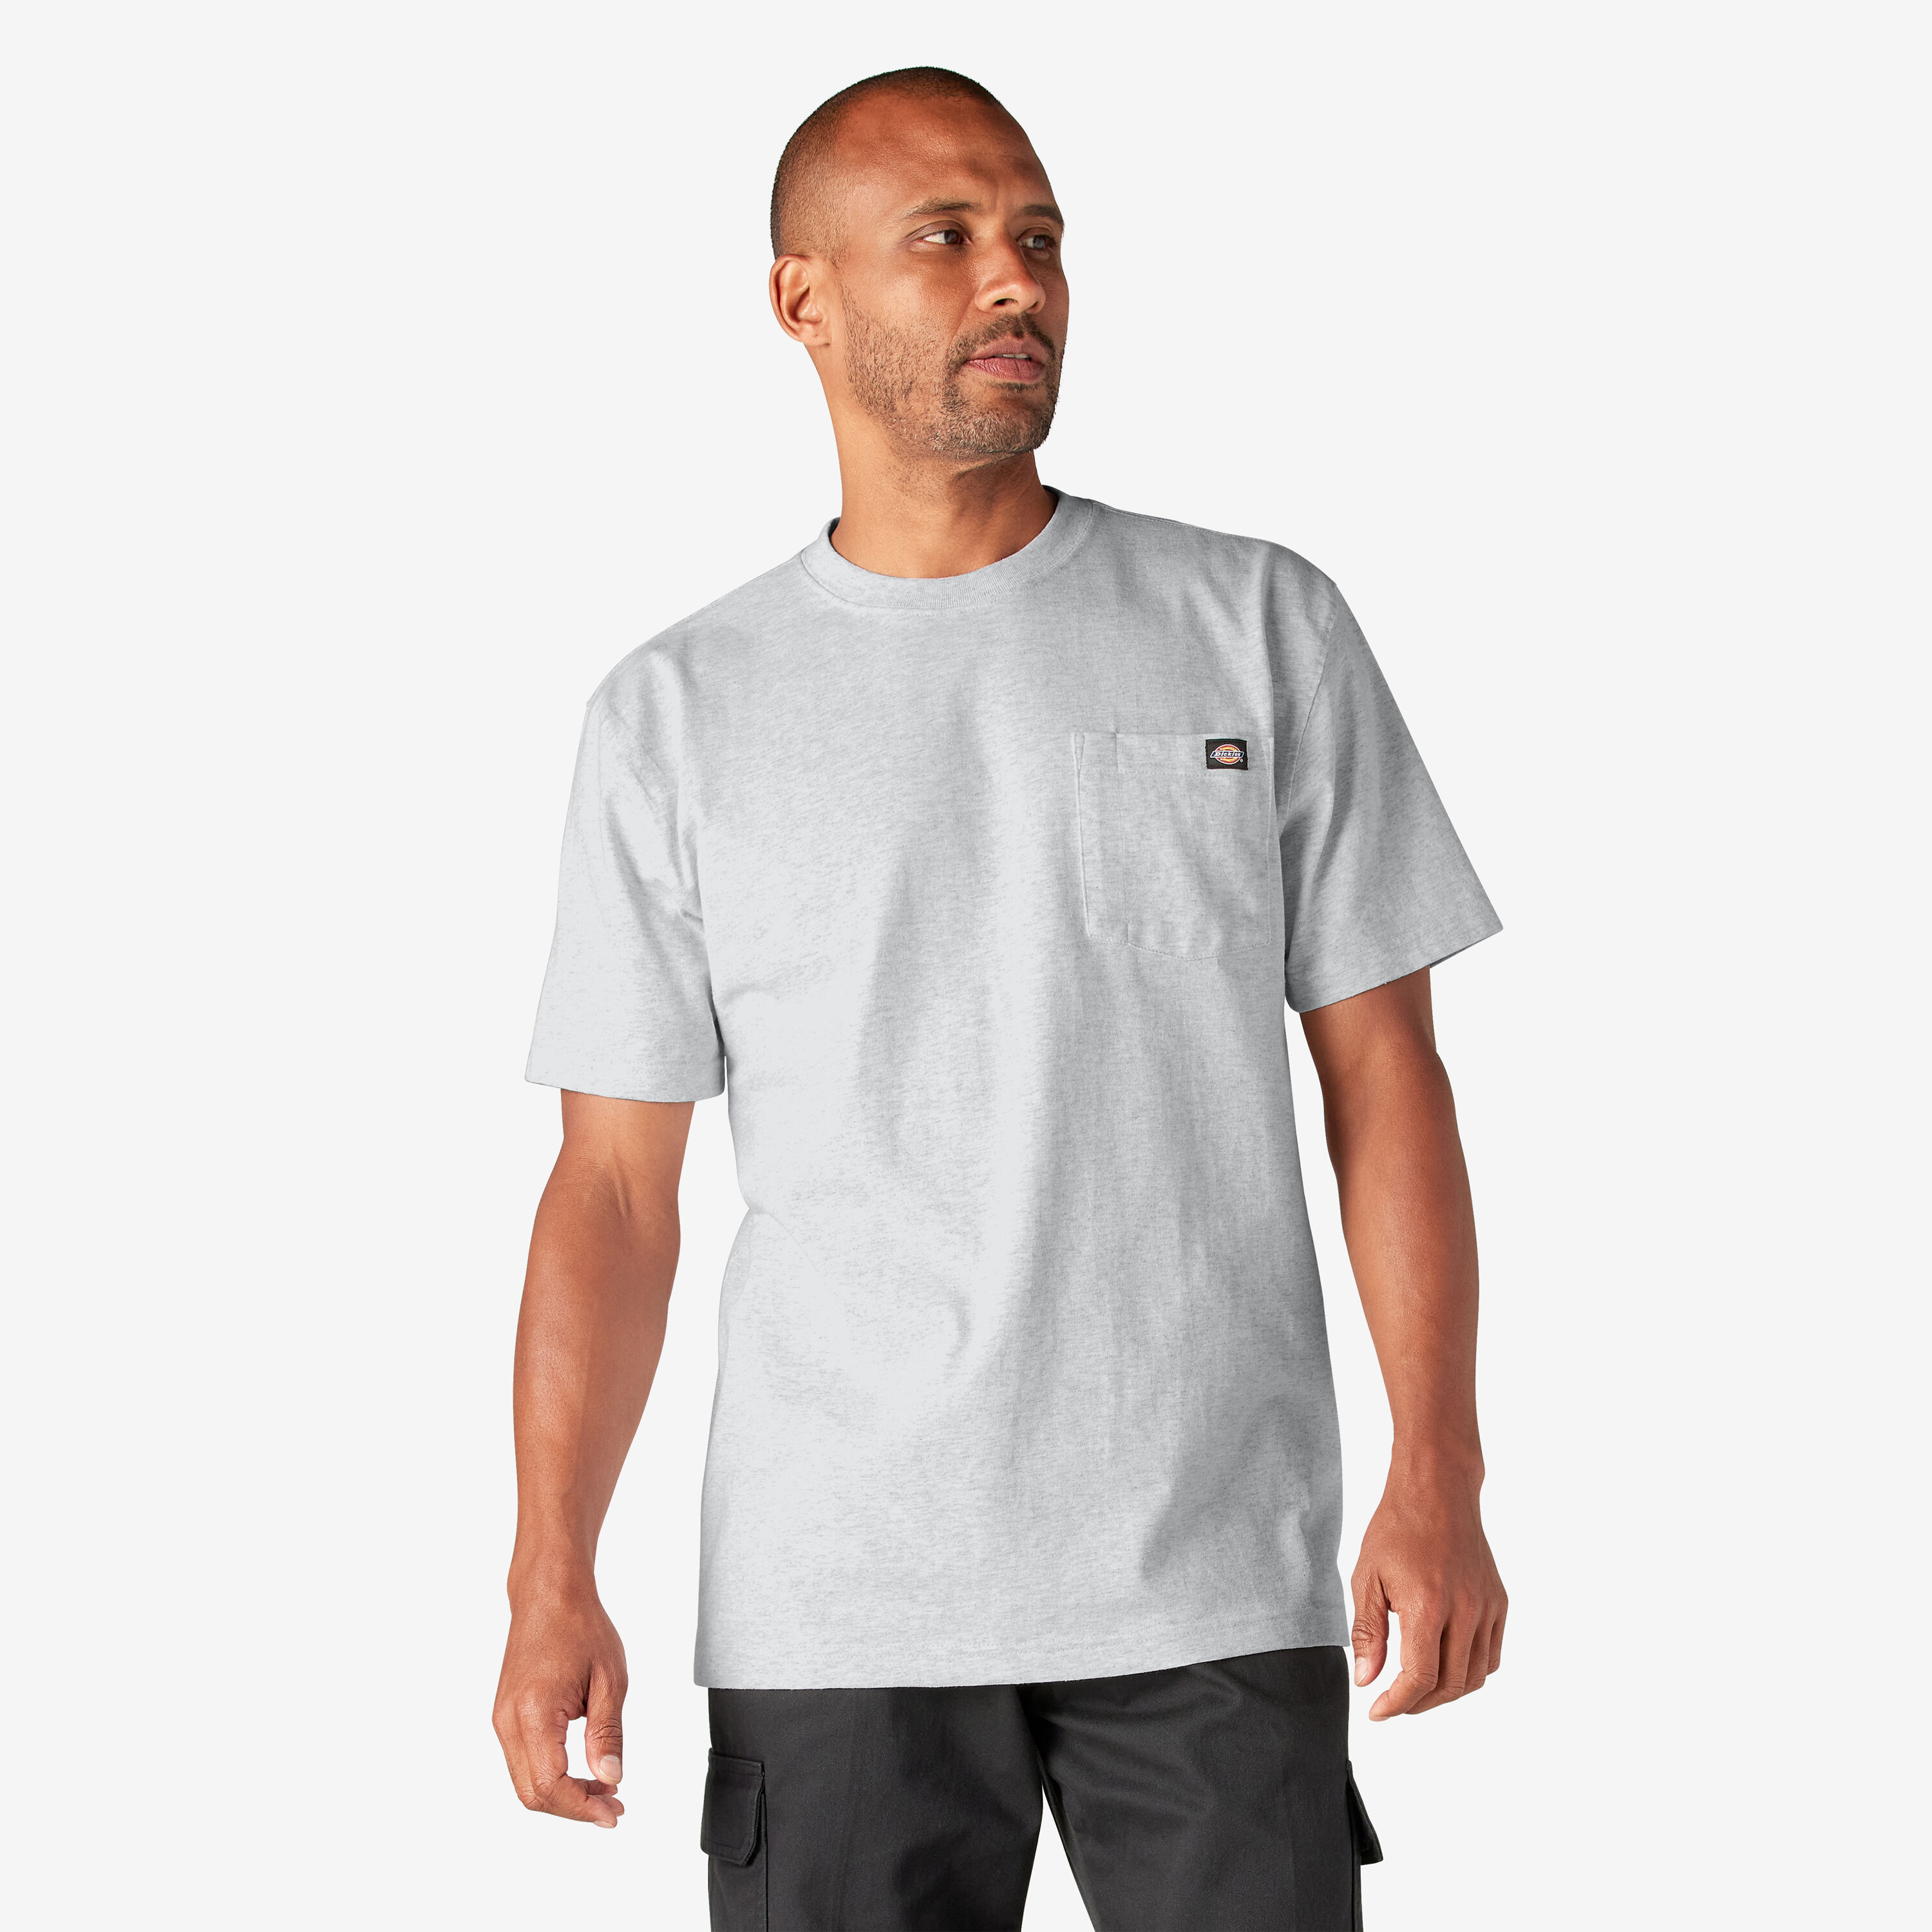 M Dickies Mens Northwood Polycotton Short Sleeve Crew Neck T Shirt Grey Melange Chest 38-40 inch